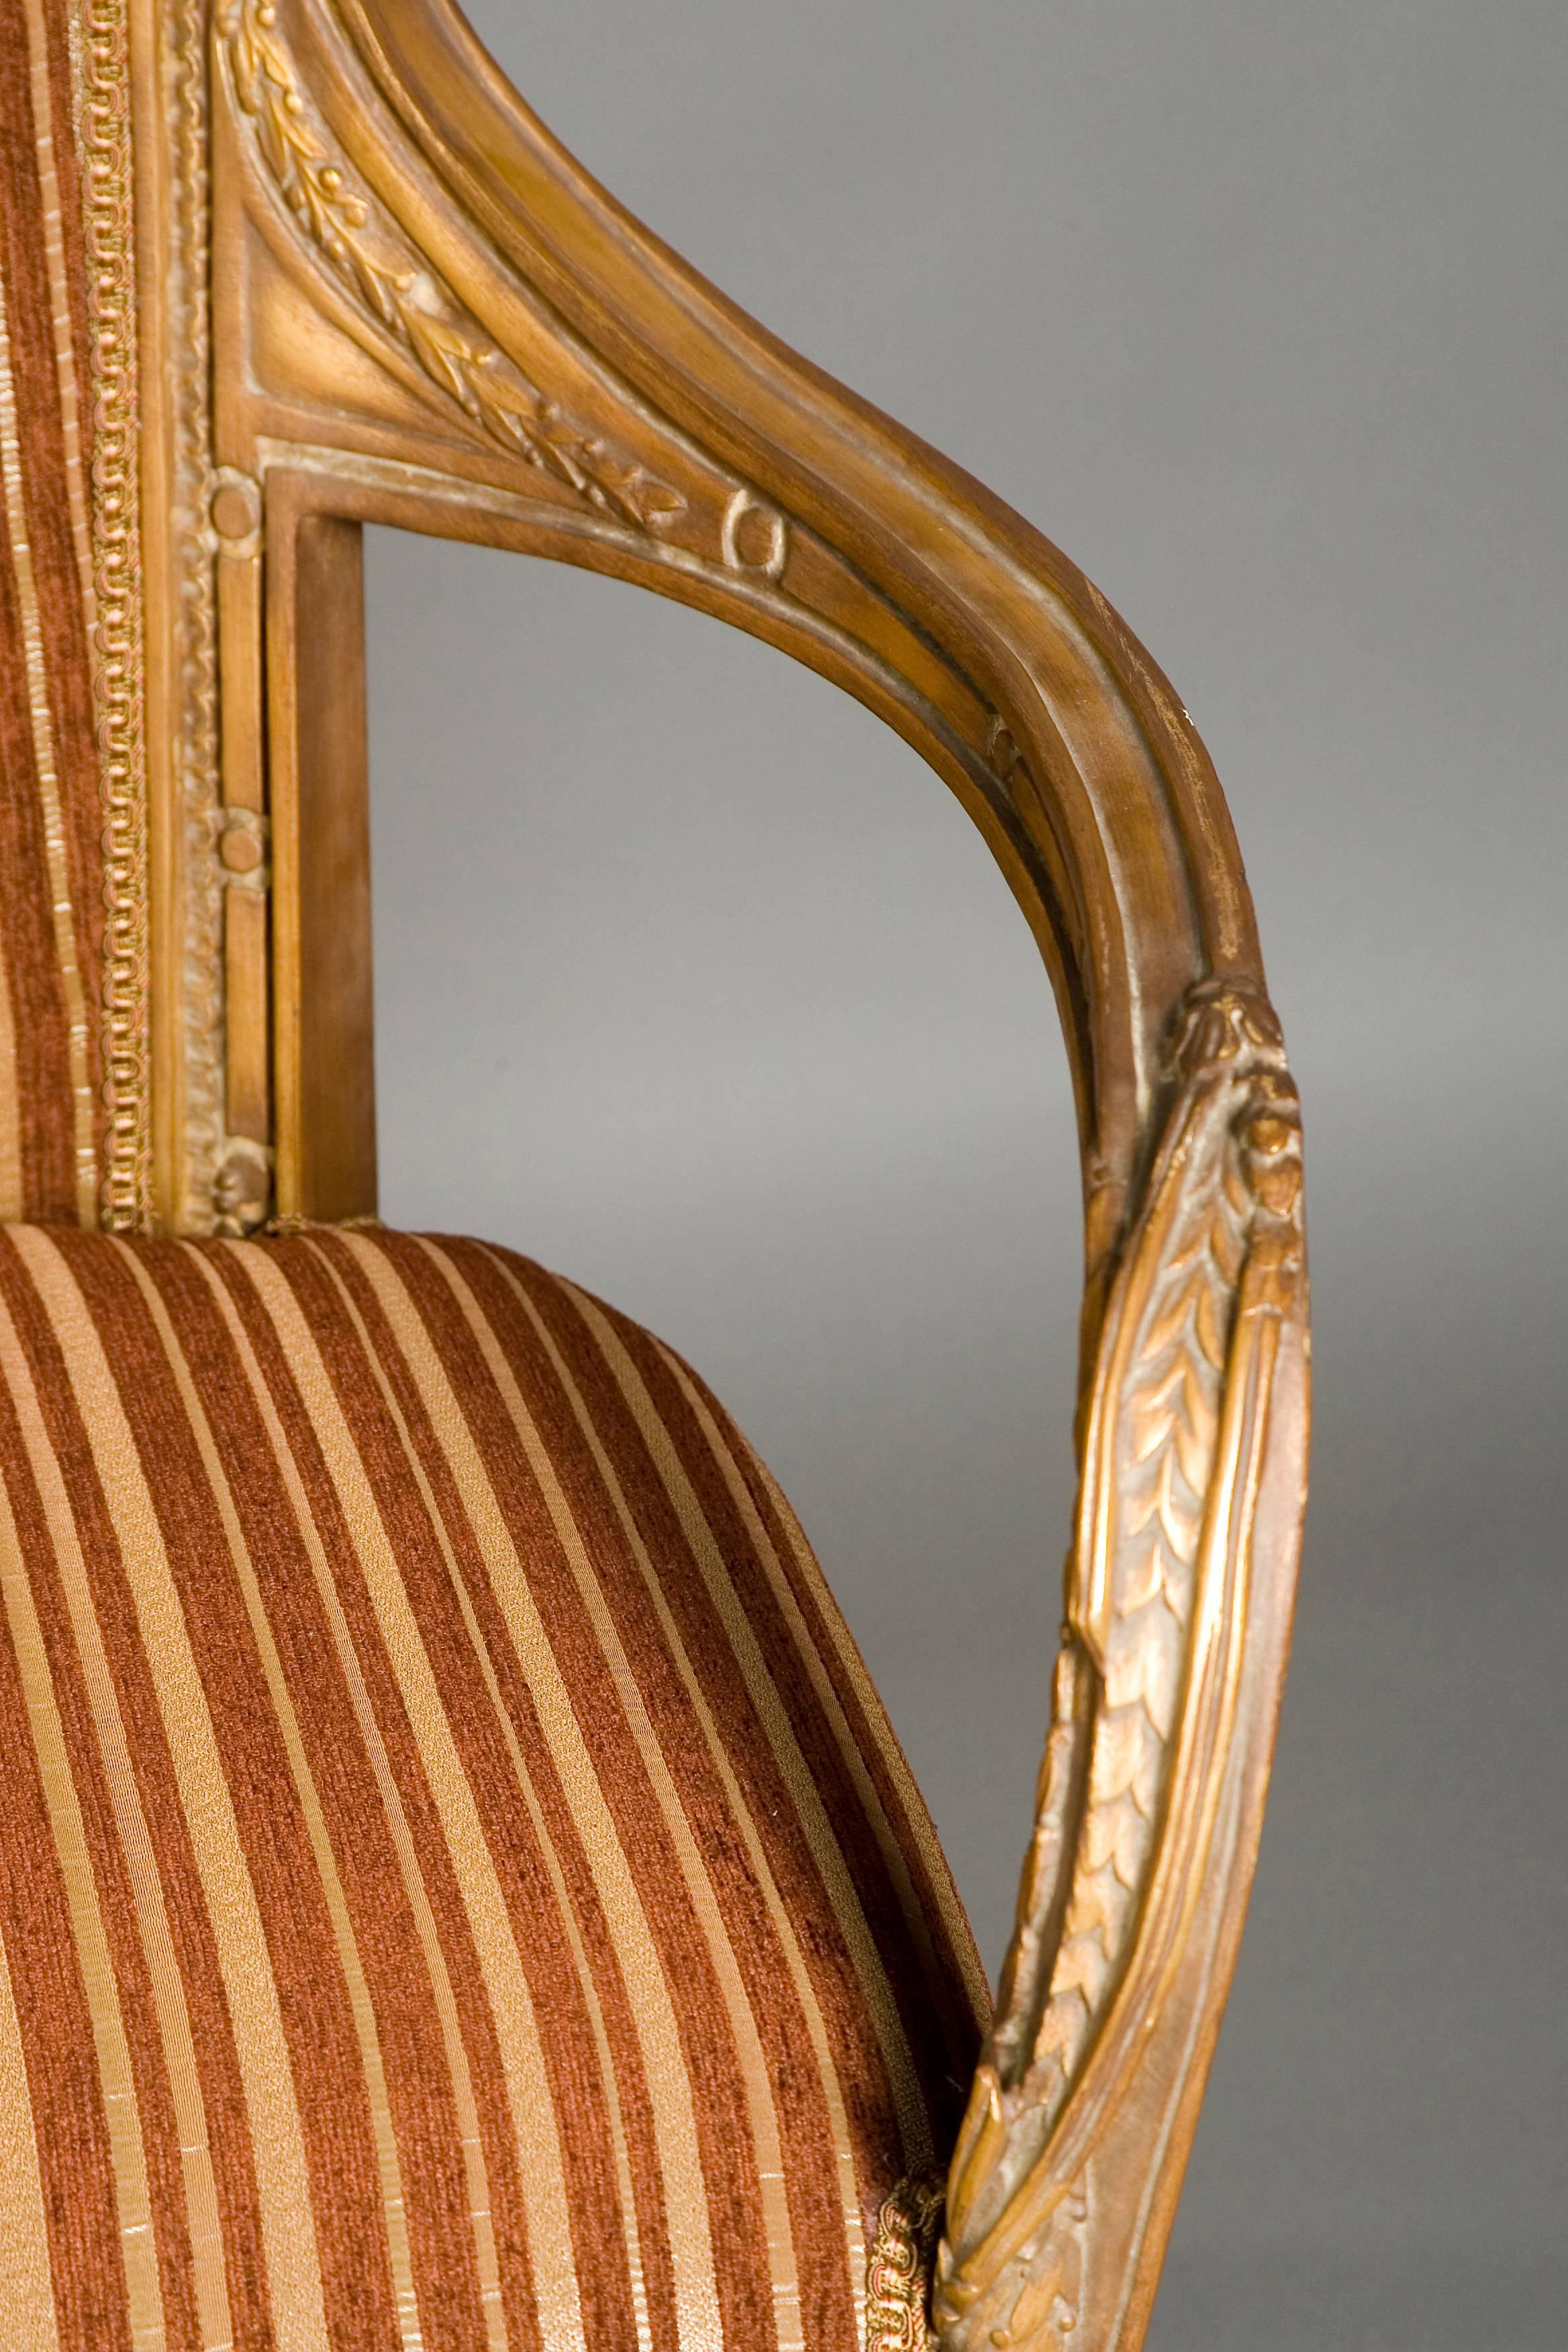 20th Century French Sofa in the Art Nouveau Style Beechwood (20. Jahrhundert)